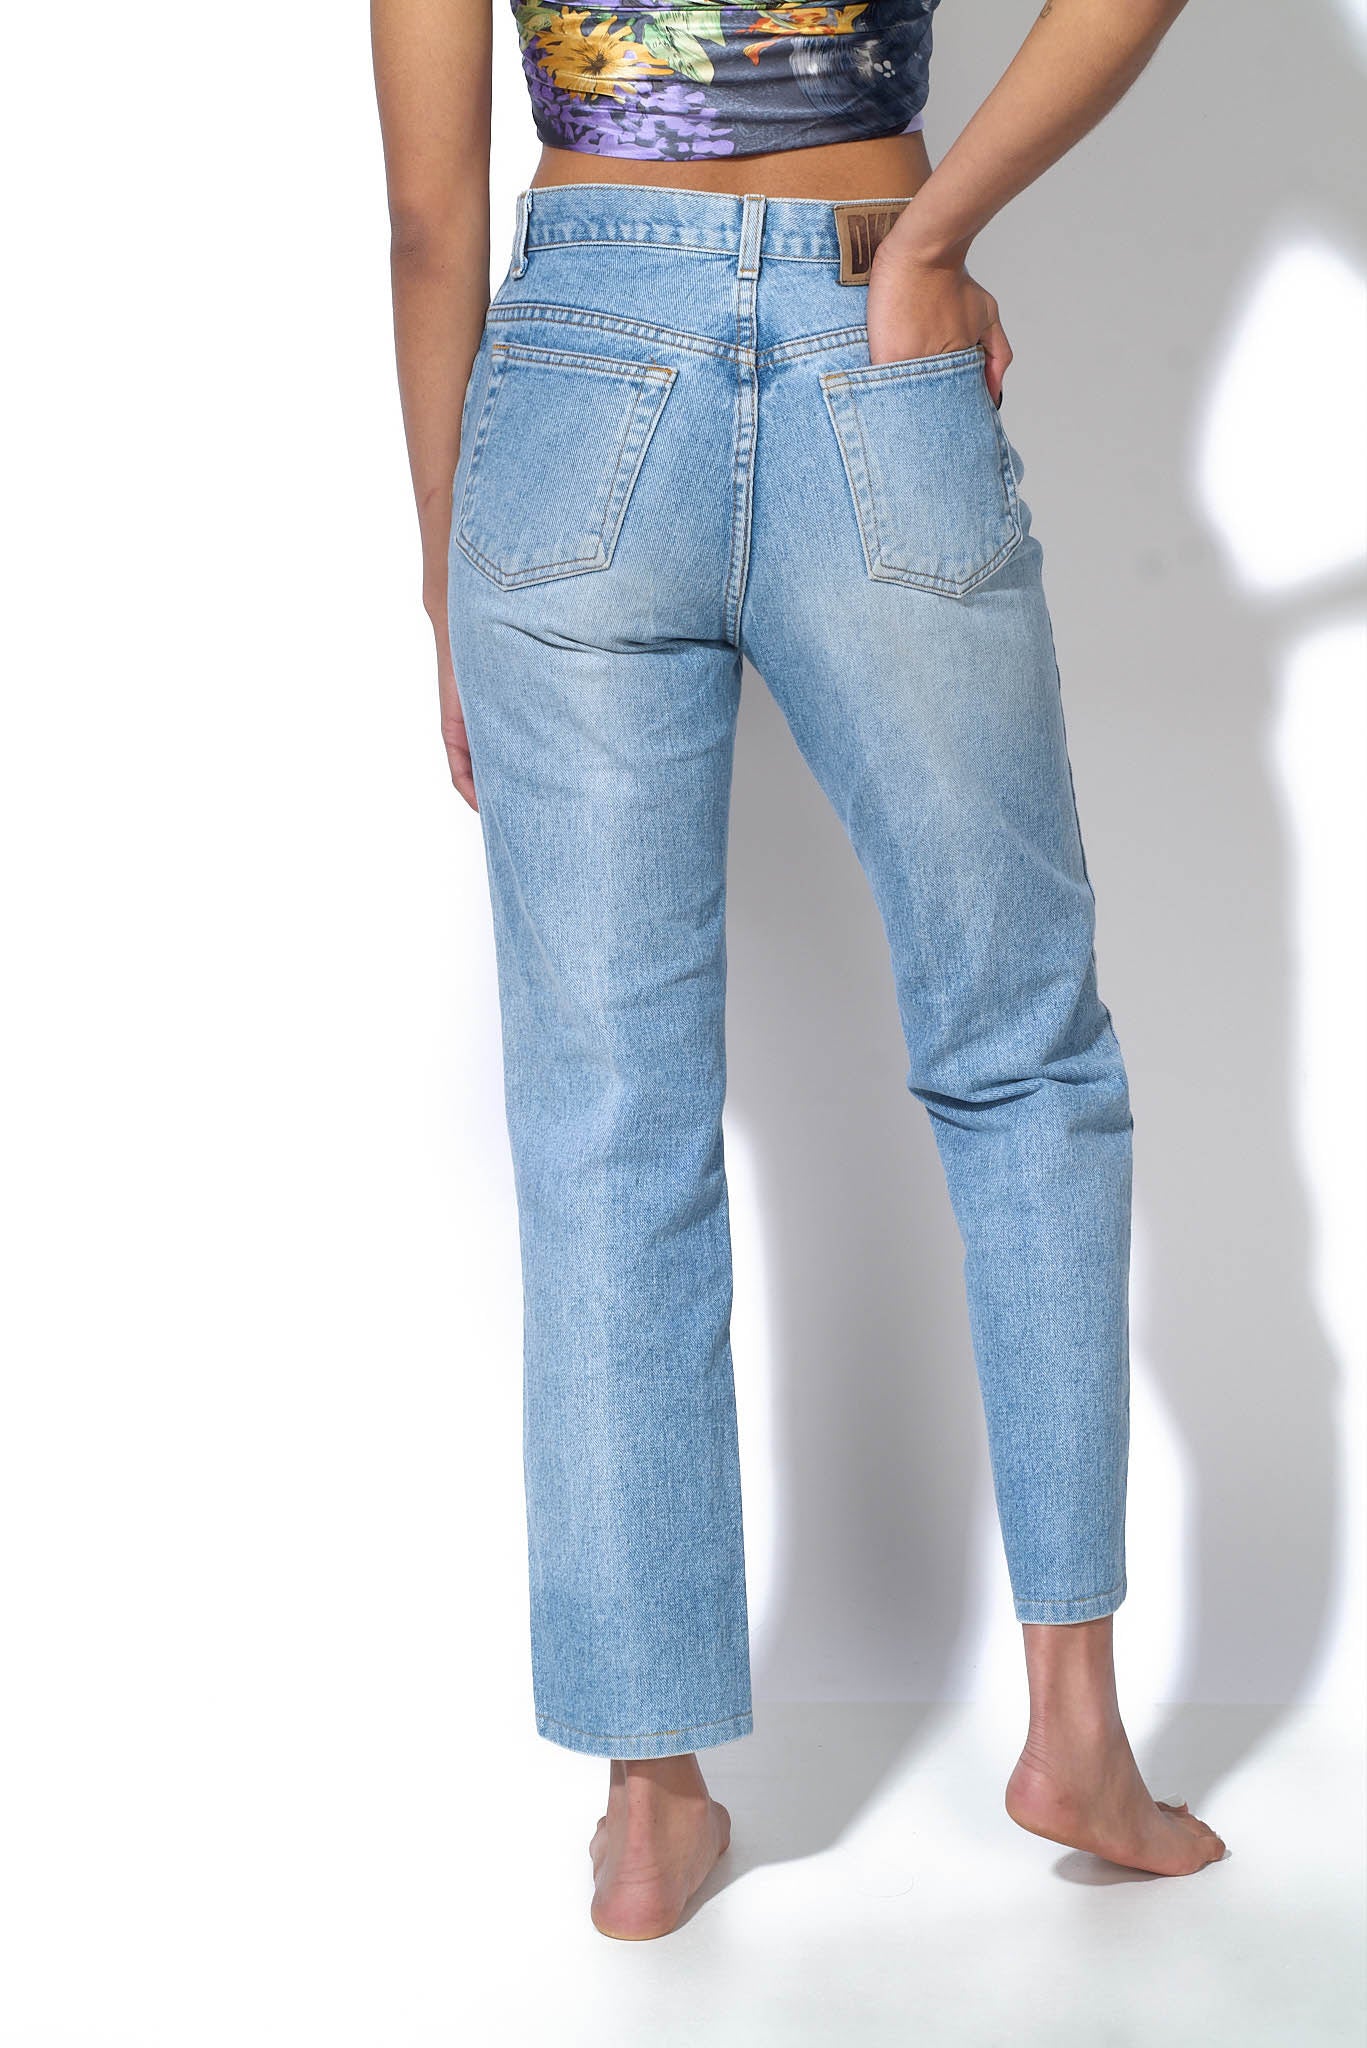 DKNY Jeans – Vintage Society